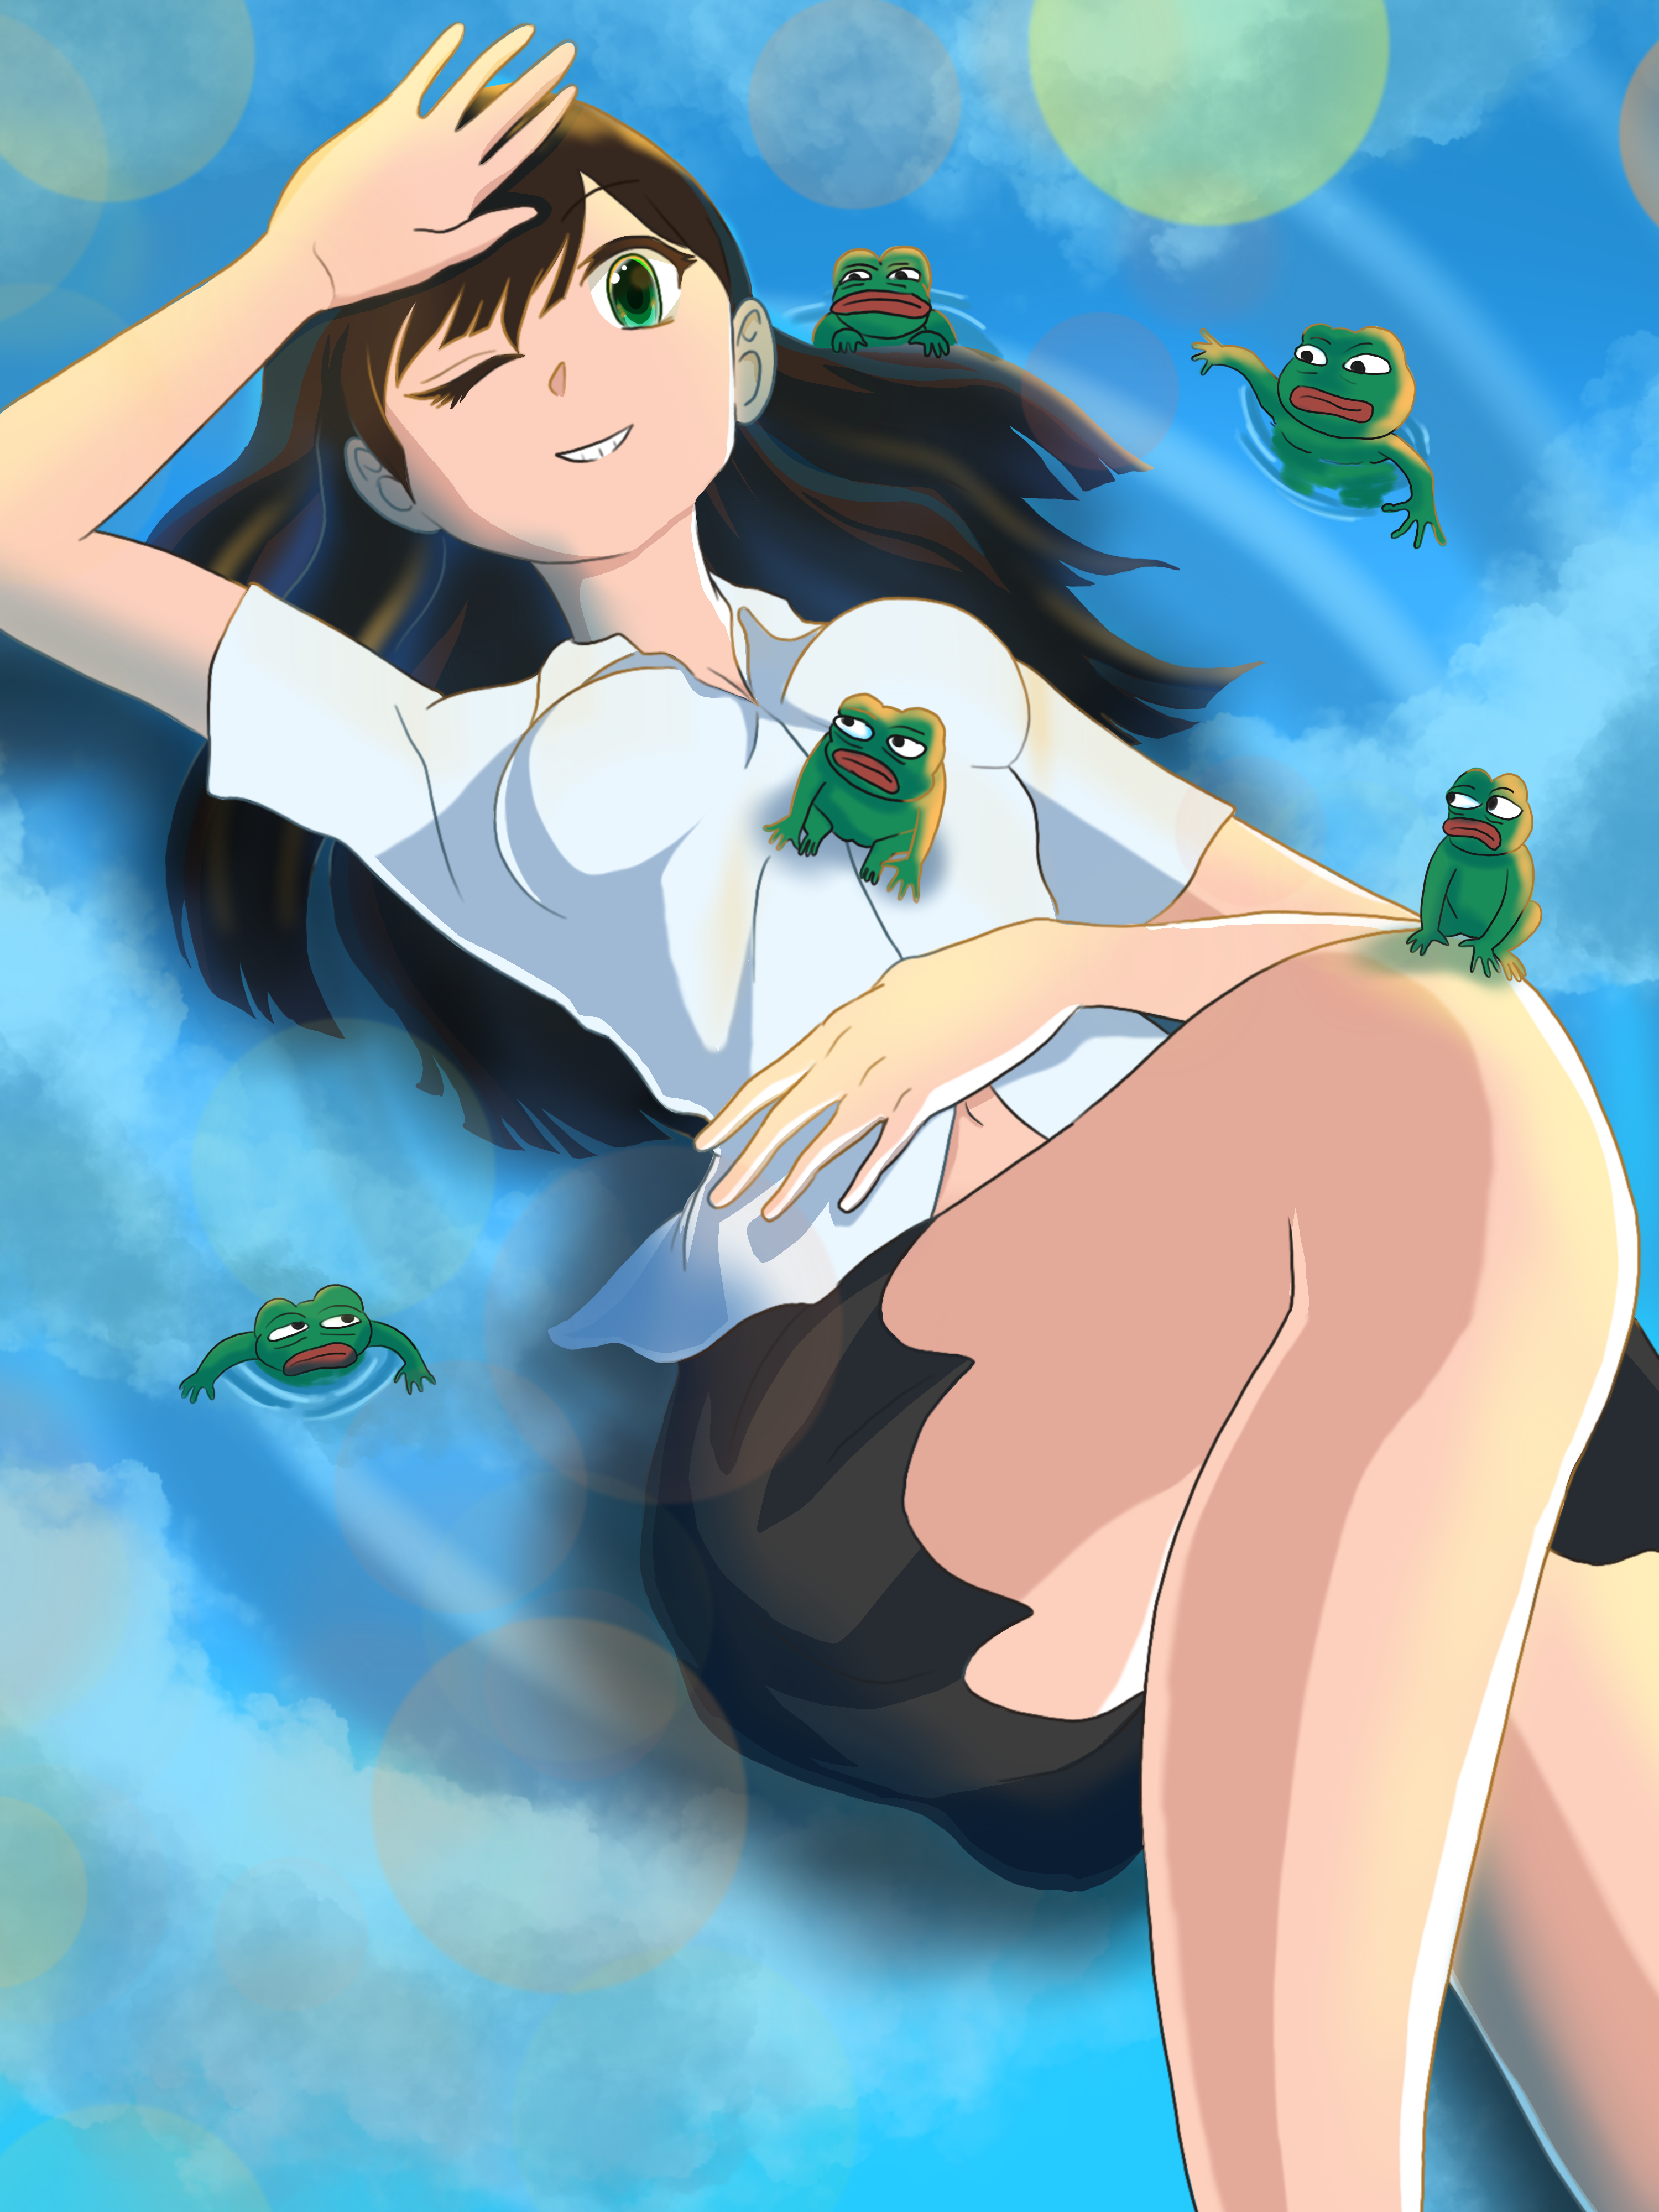 pepe frog x pika plush charm gift room decor anime cartoon flower kawai  cute | eBay